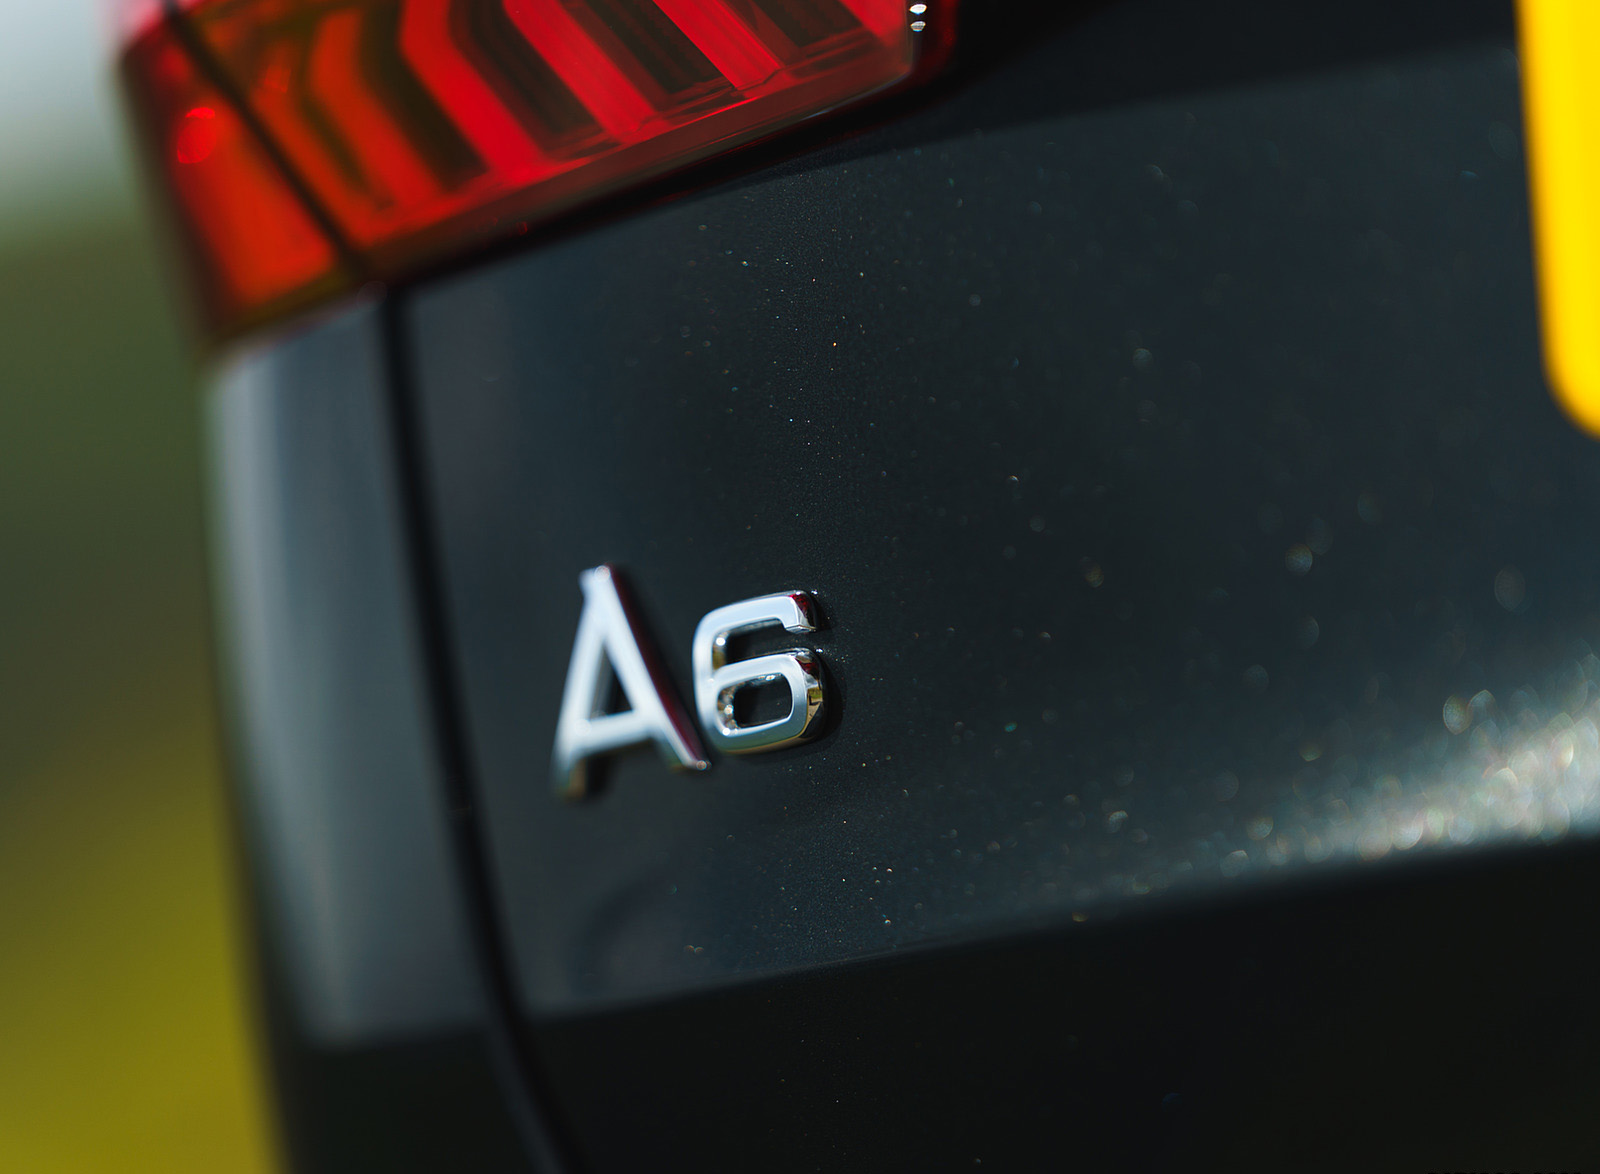 2019 Audi A6 Avant 50 TDI Quattro (UK-Spec) Badge Wallpapers #35 of 62